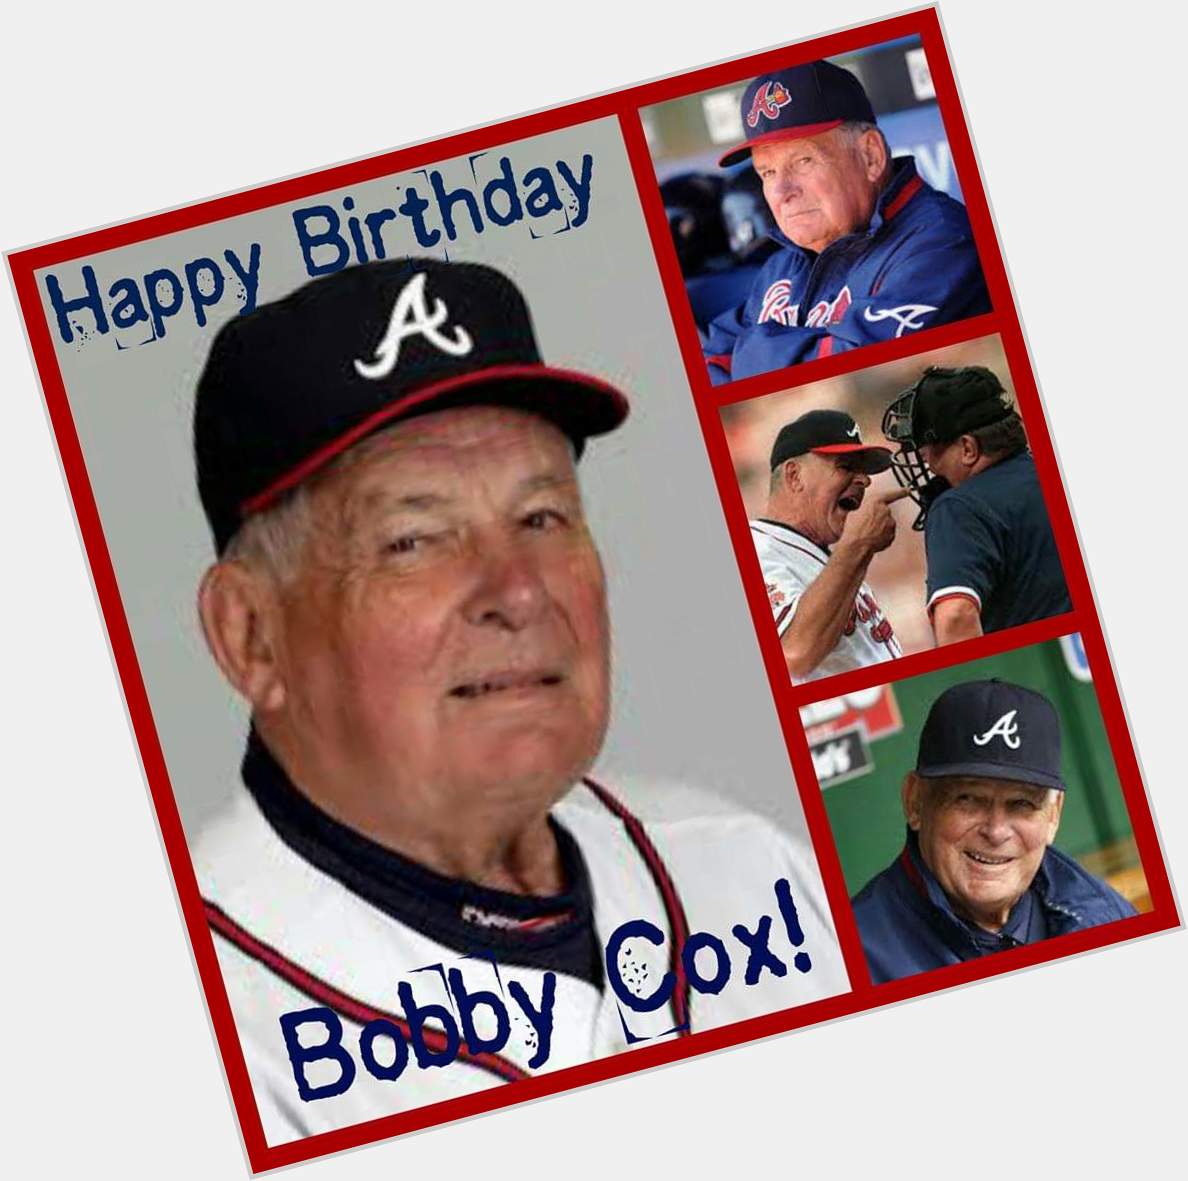 Happy birthday to the great Bobby Cox! 